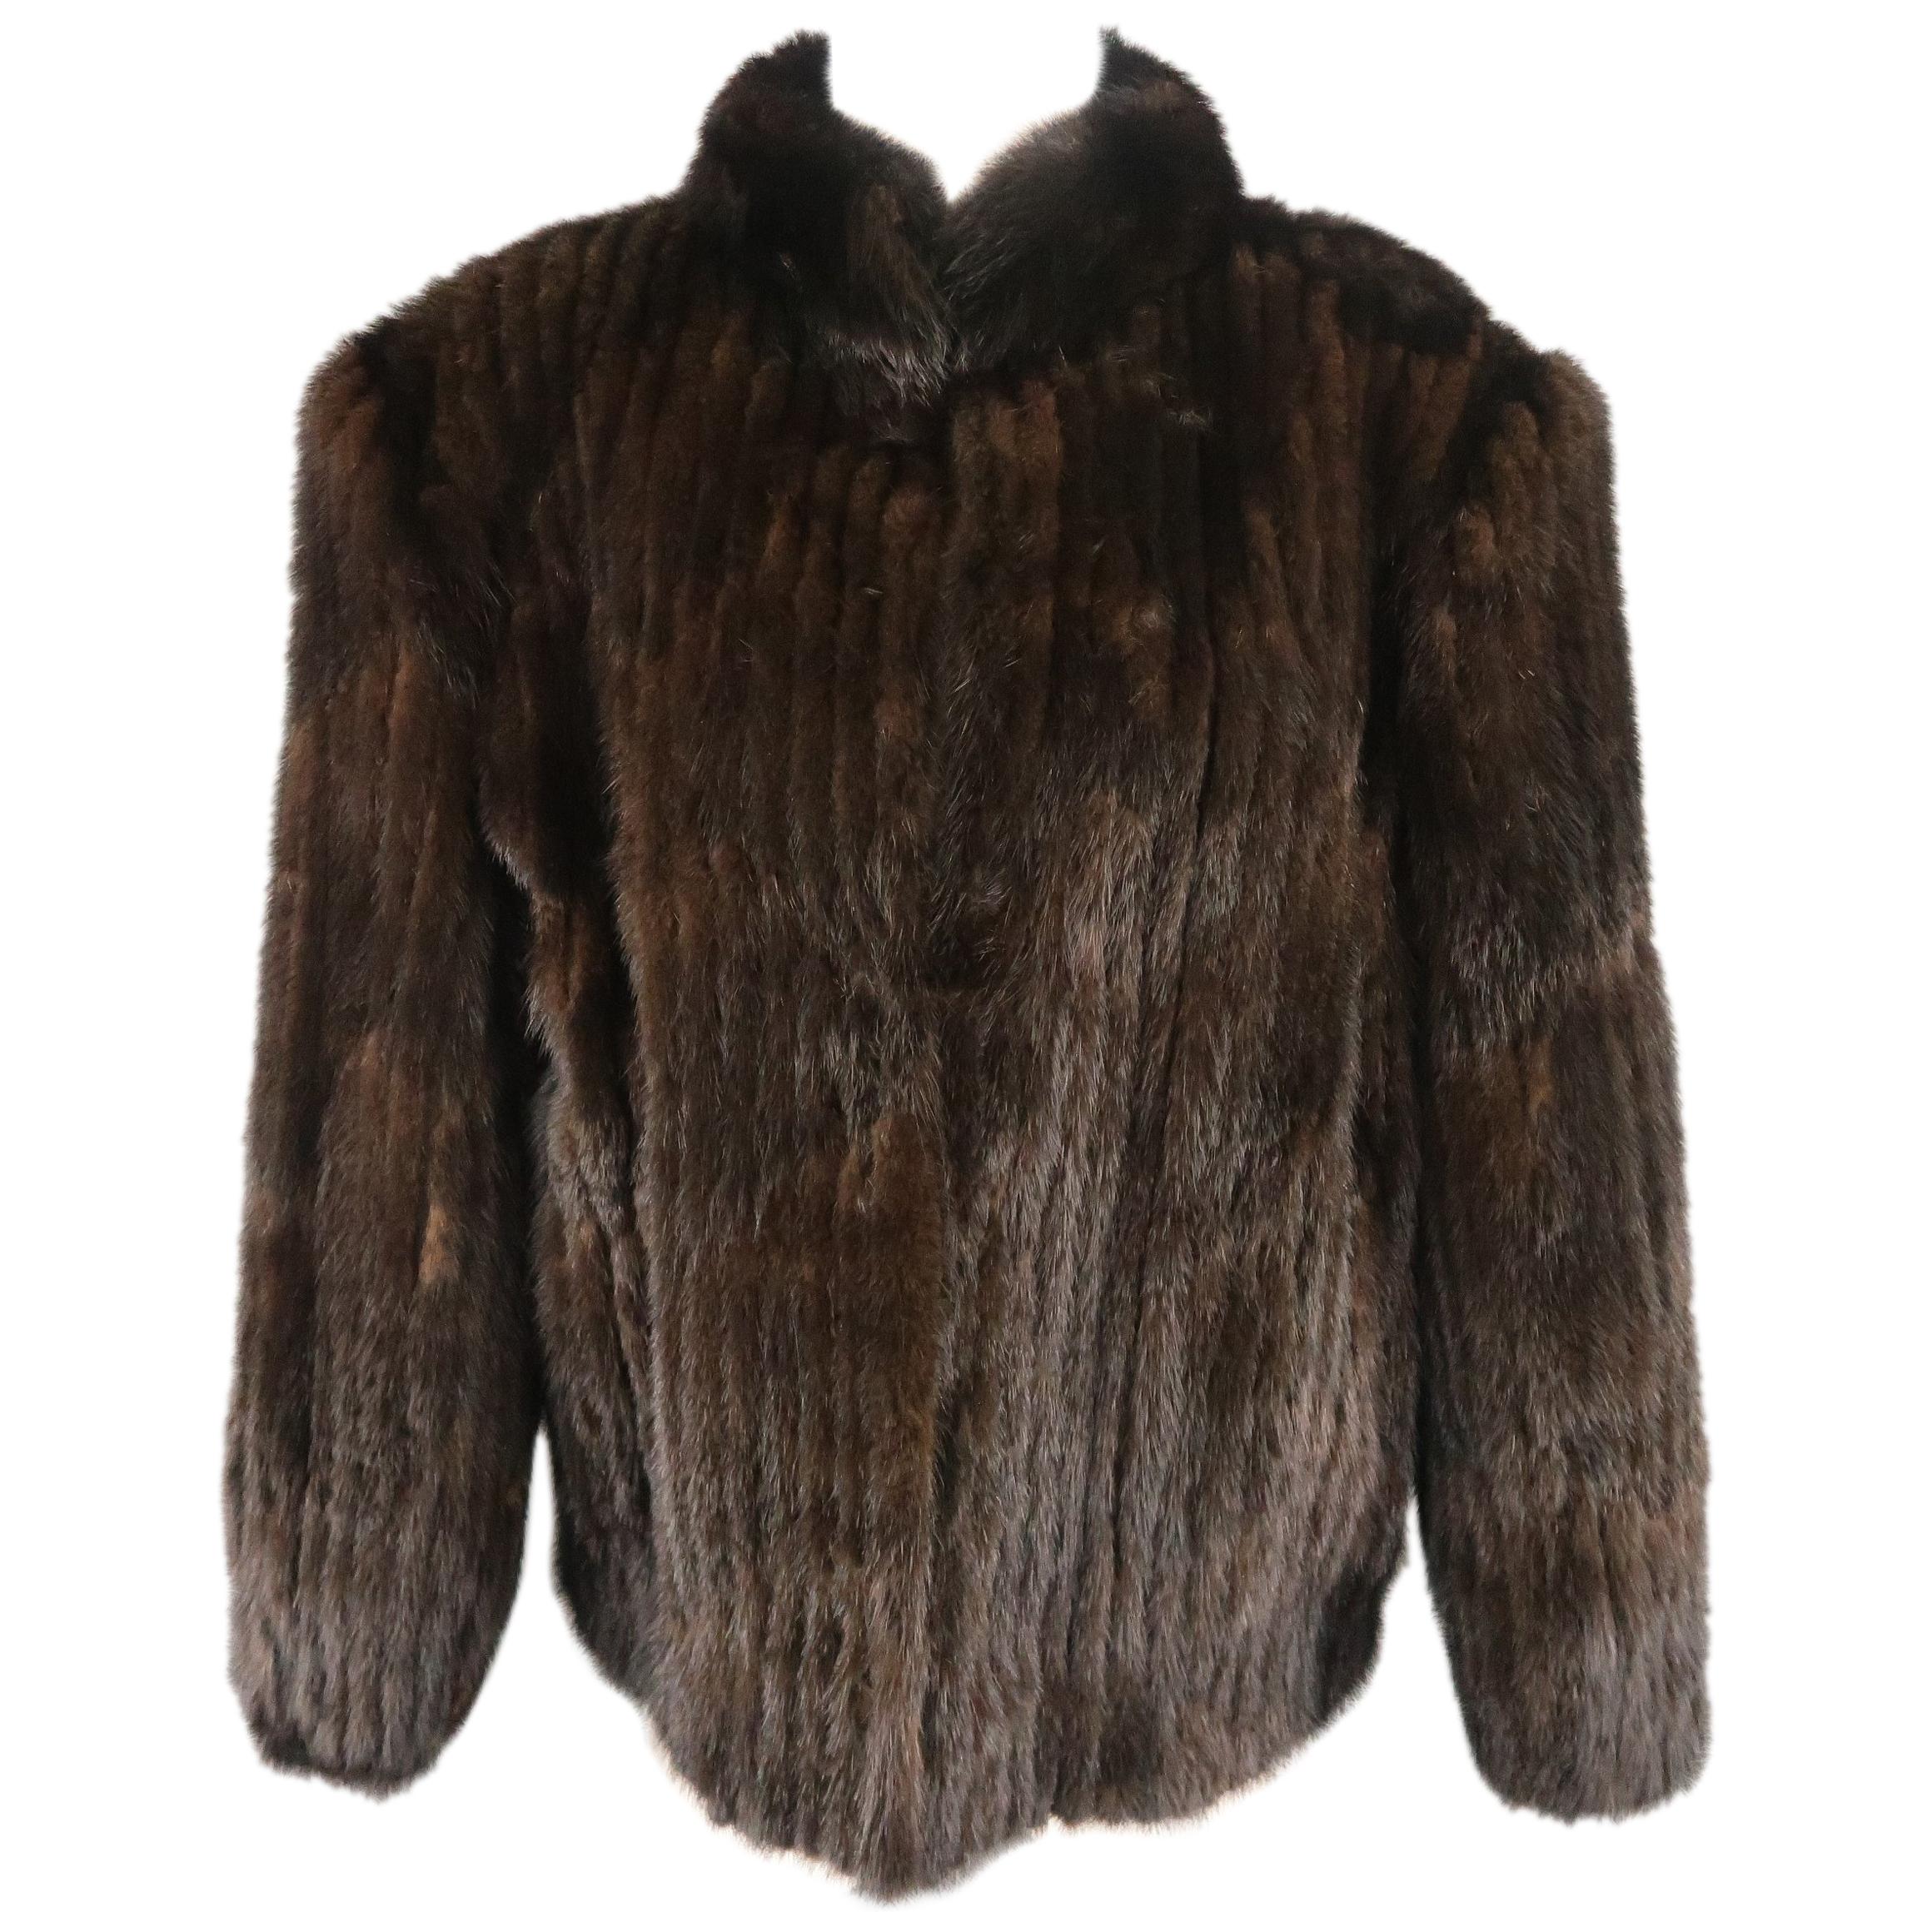  Vintage SAGA Size L Dark Brown Mink Fur Coat